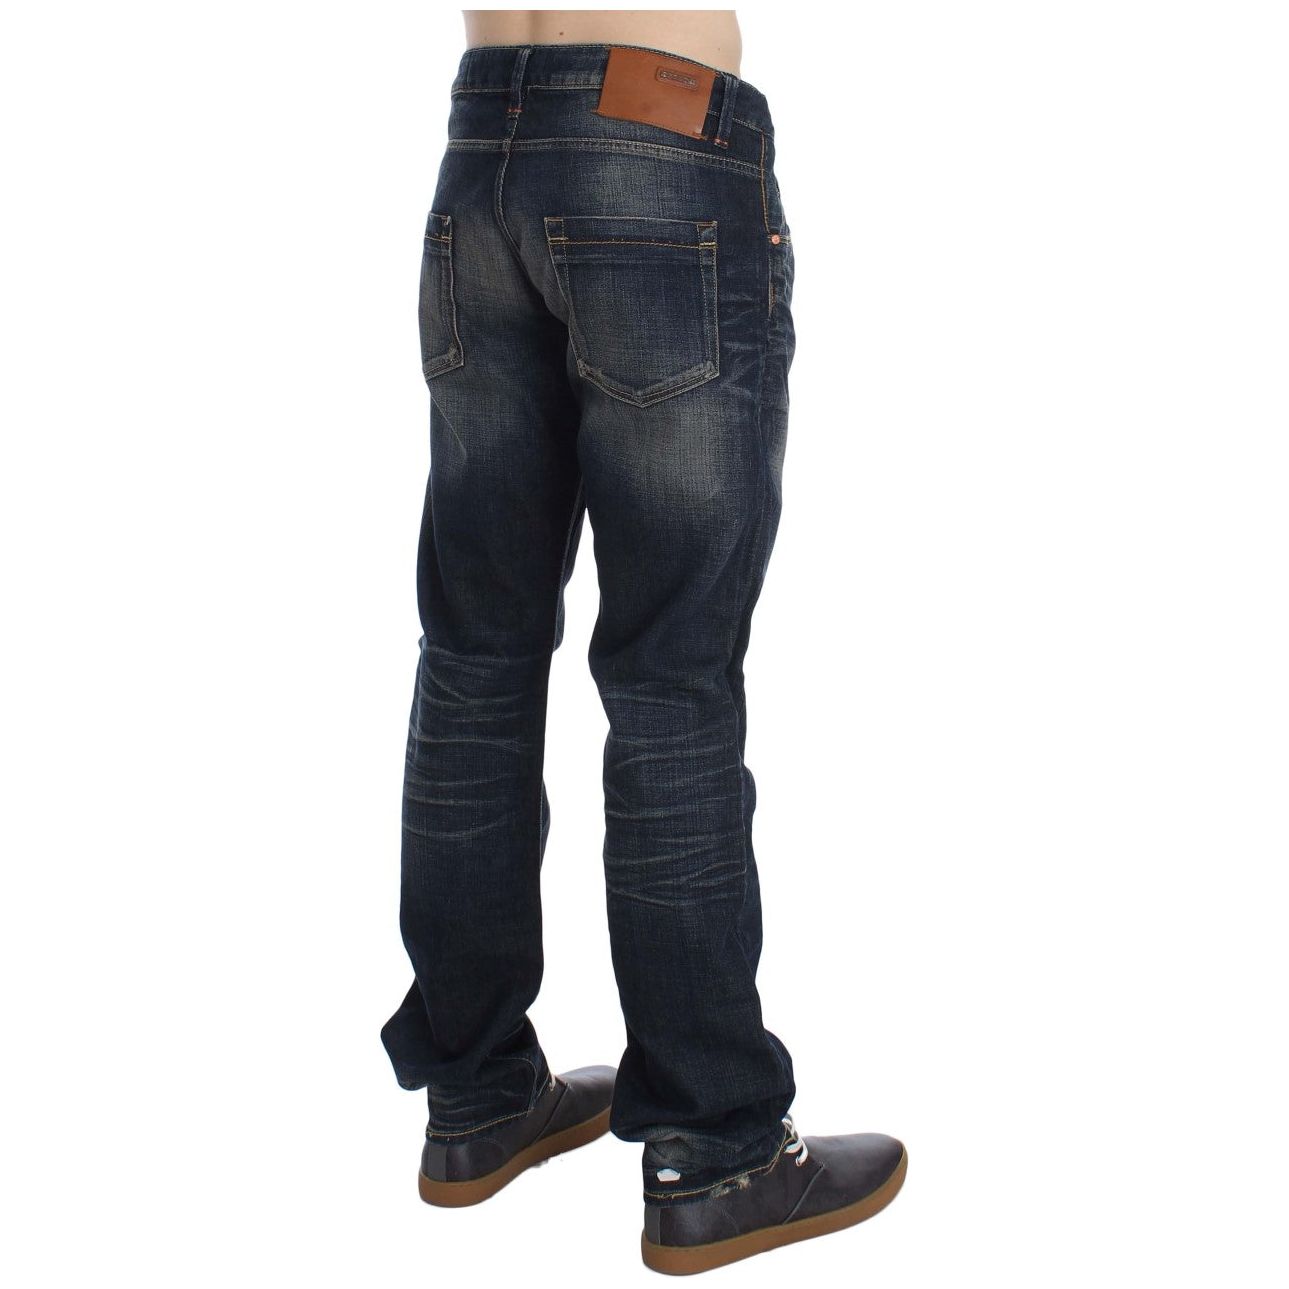 Acht Elegant Straight Fit Low Waist Men's Jeans blue-wash-straight-fit-low-waist-jeans 299234-blue-wash-straight-fit-low-waist-jeans.jpg